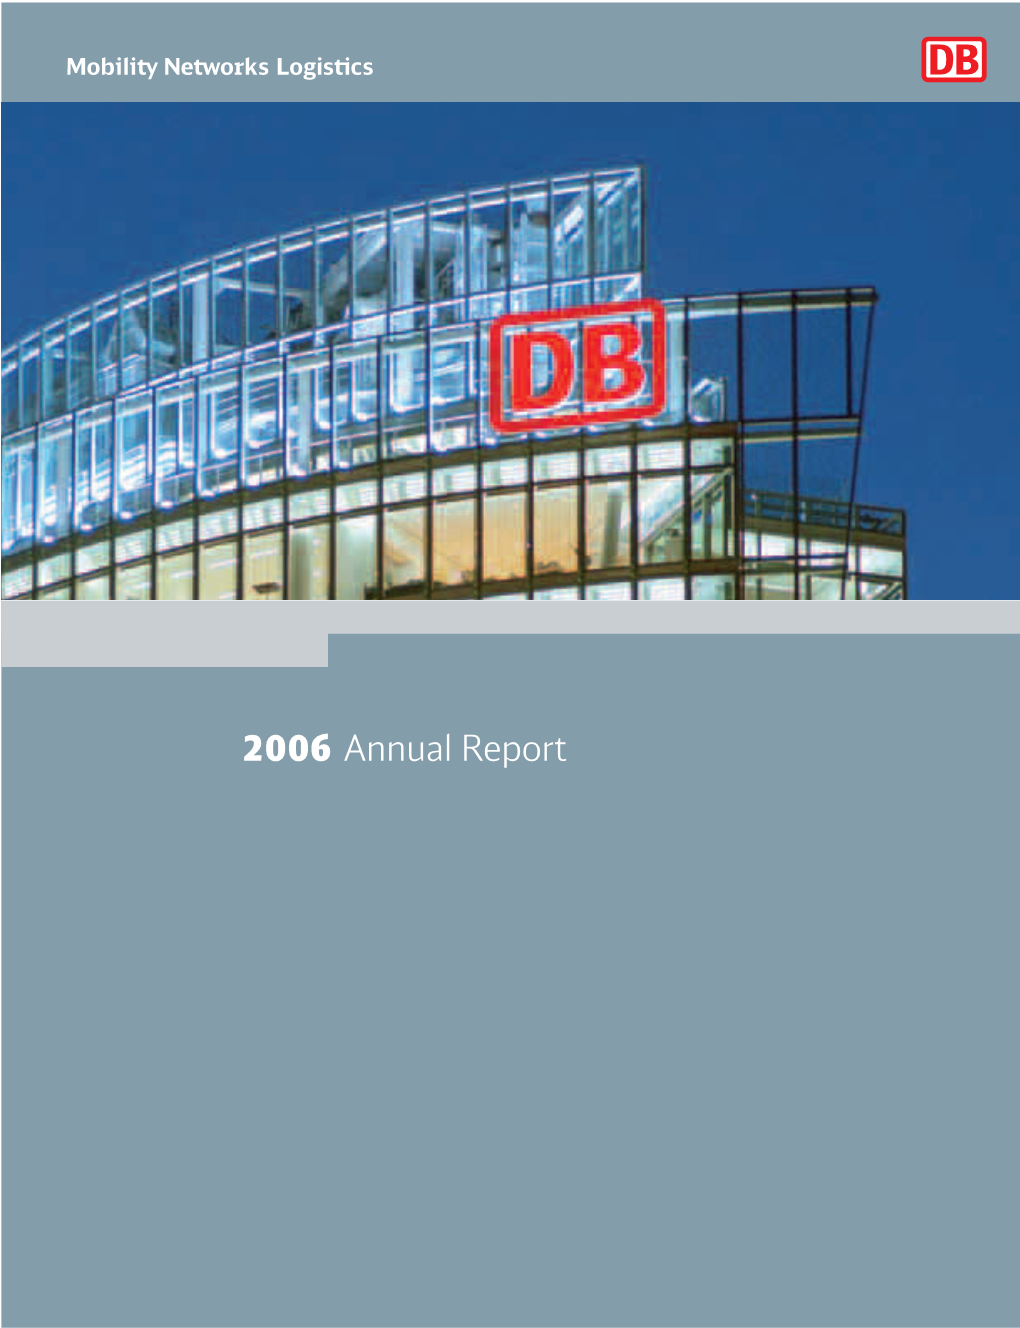 Deutsche Bahn Annual Report 2006